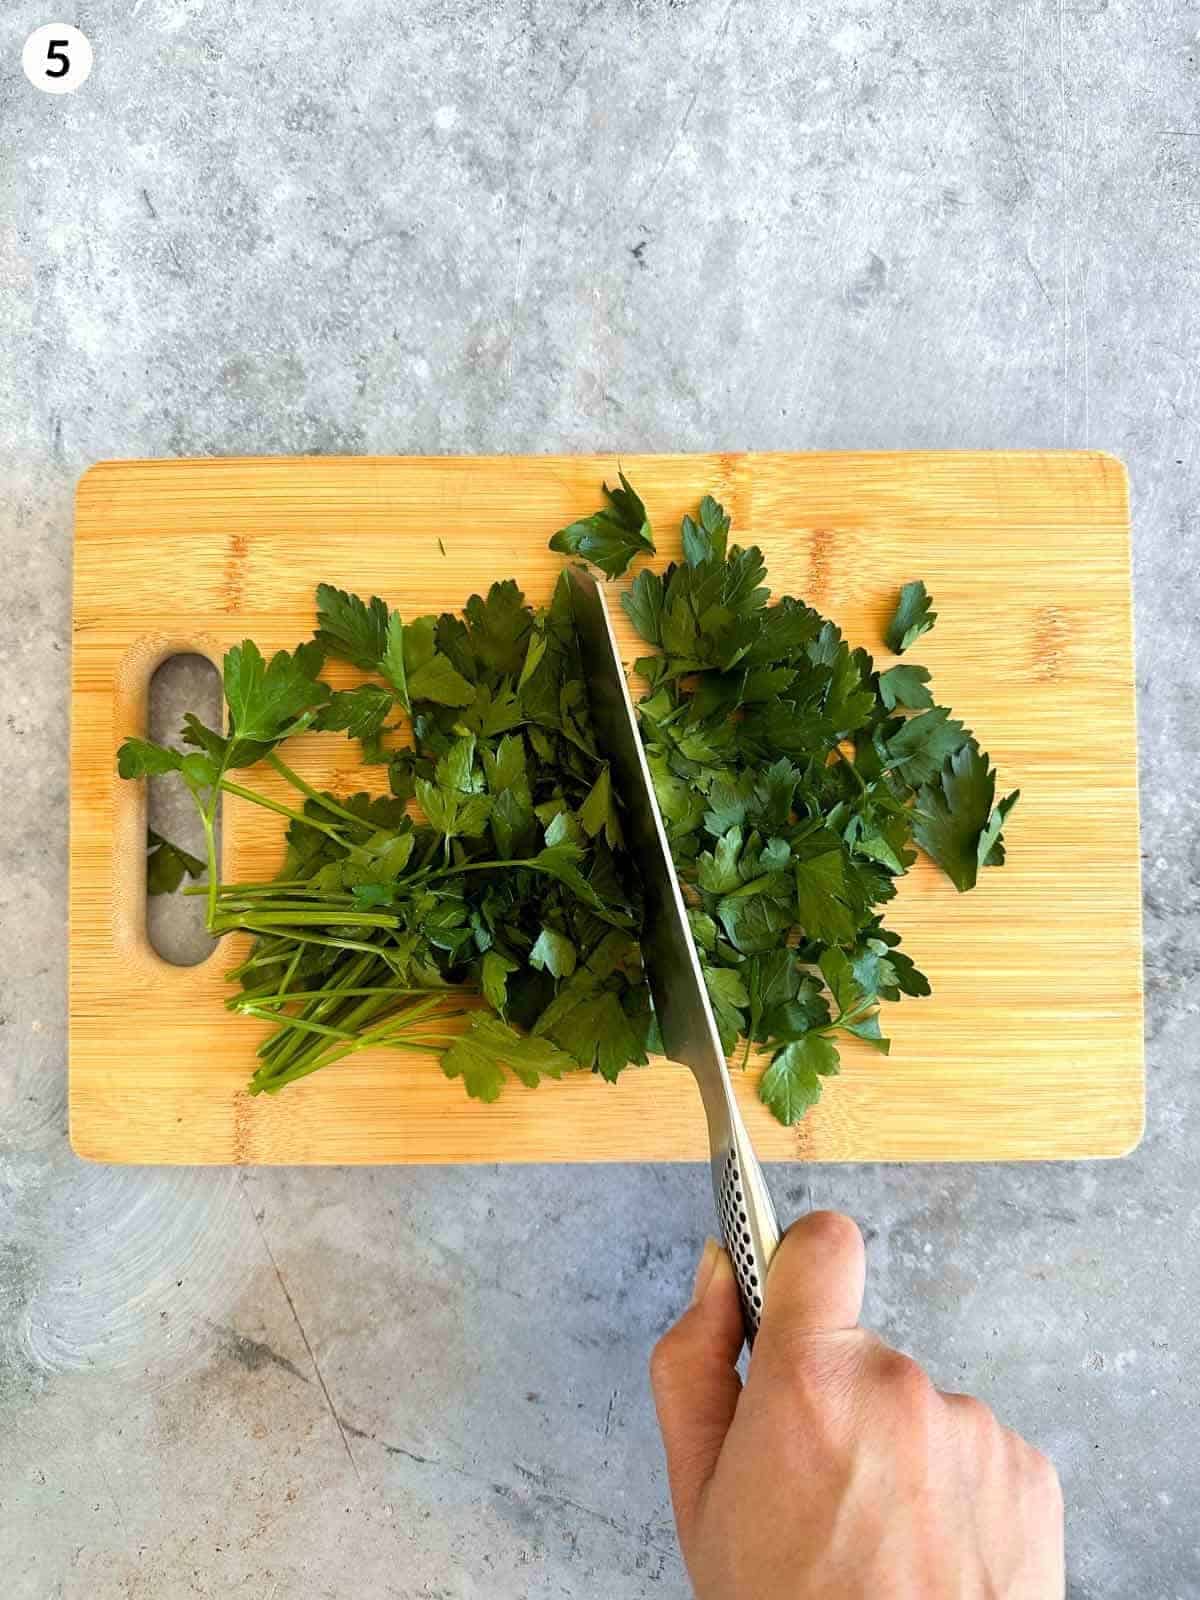 Cutting flat leaf parsley with a knife on a wooden board